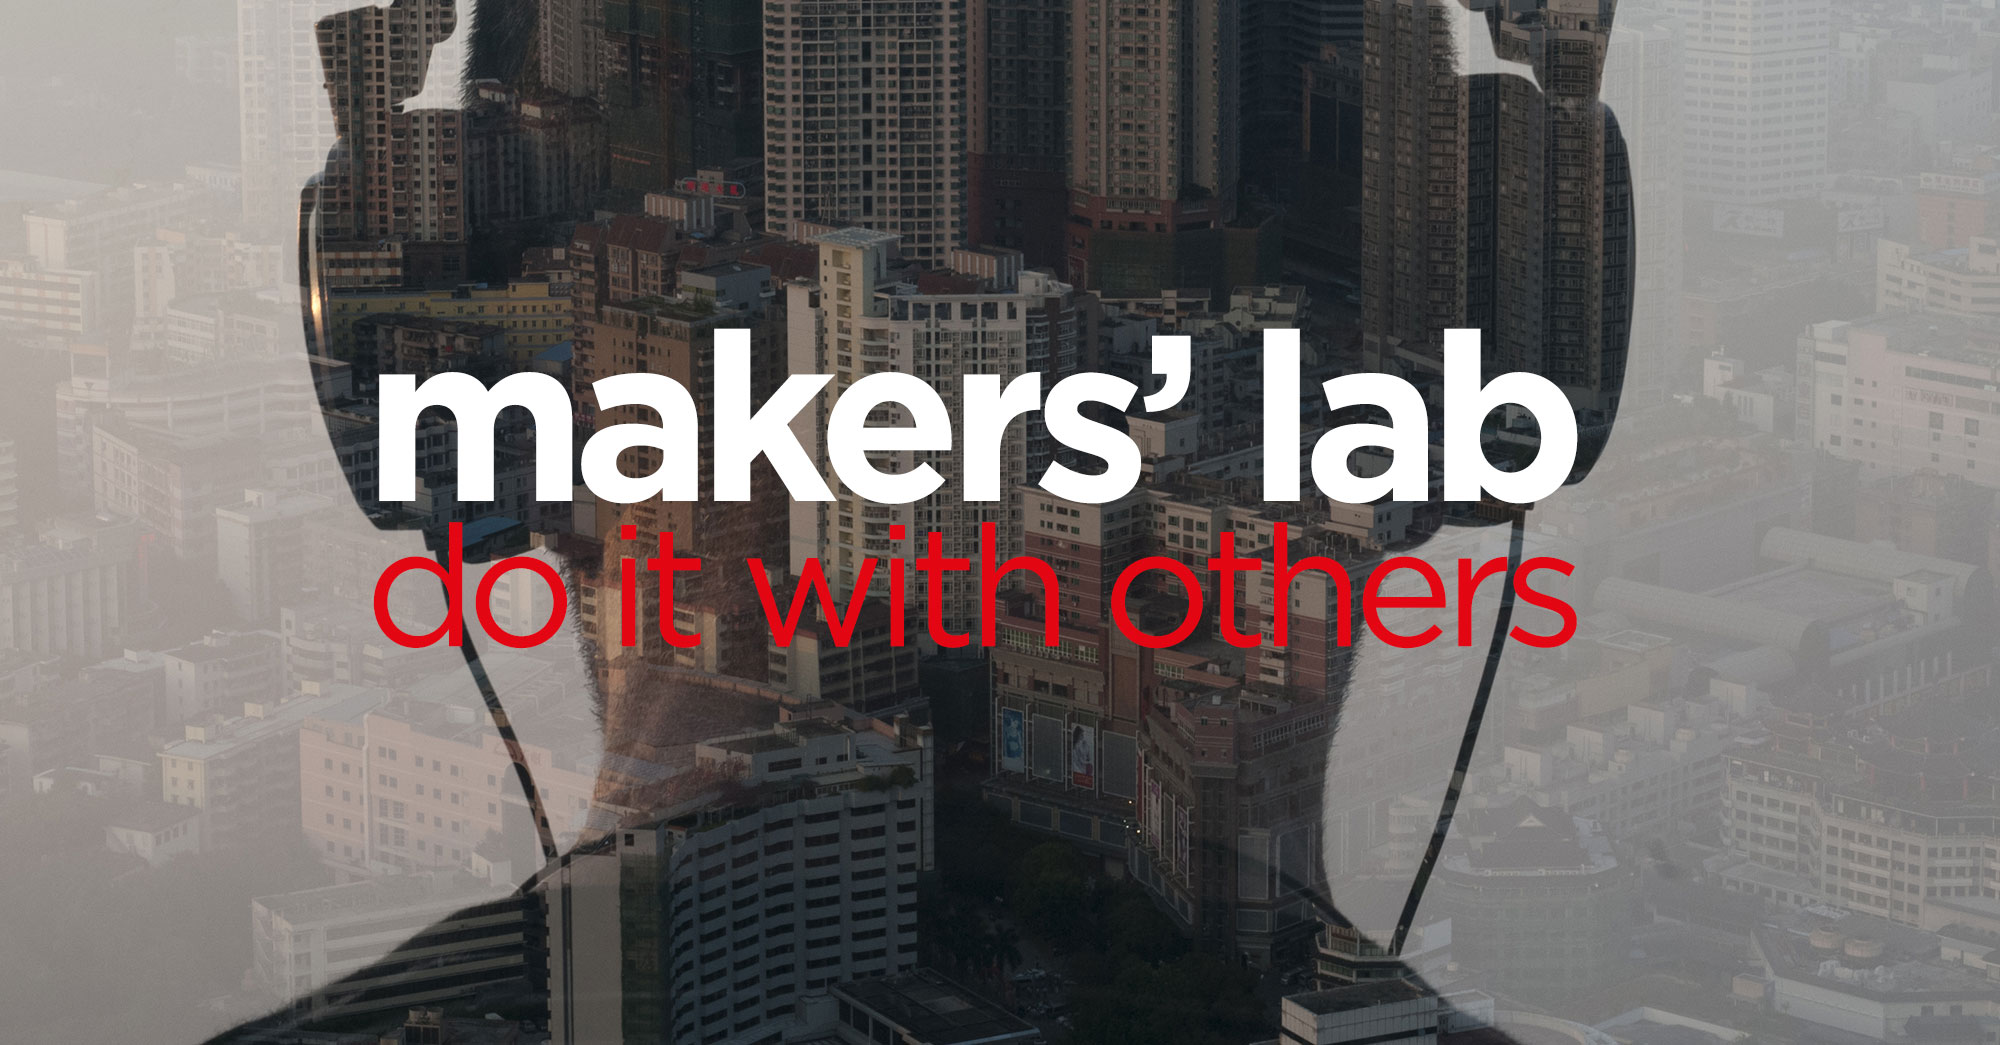 Group Makers lab maker lab.jpg